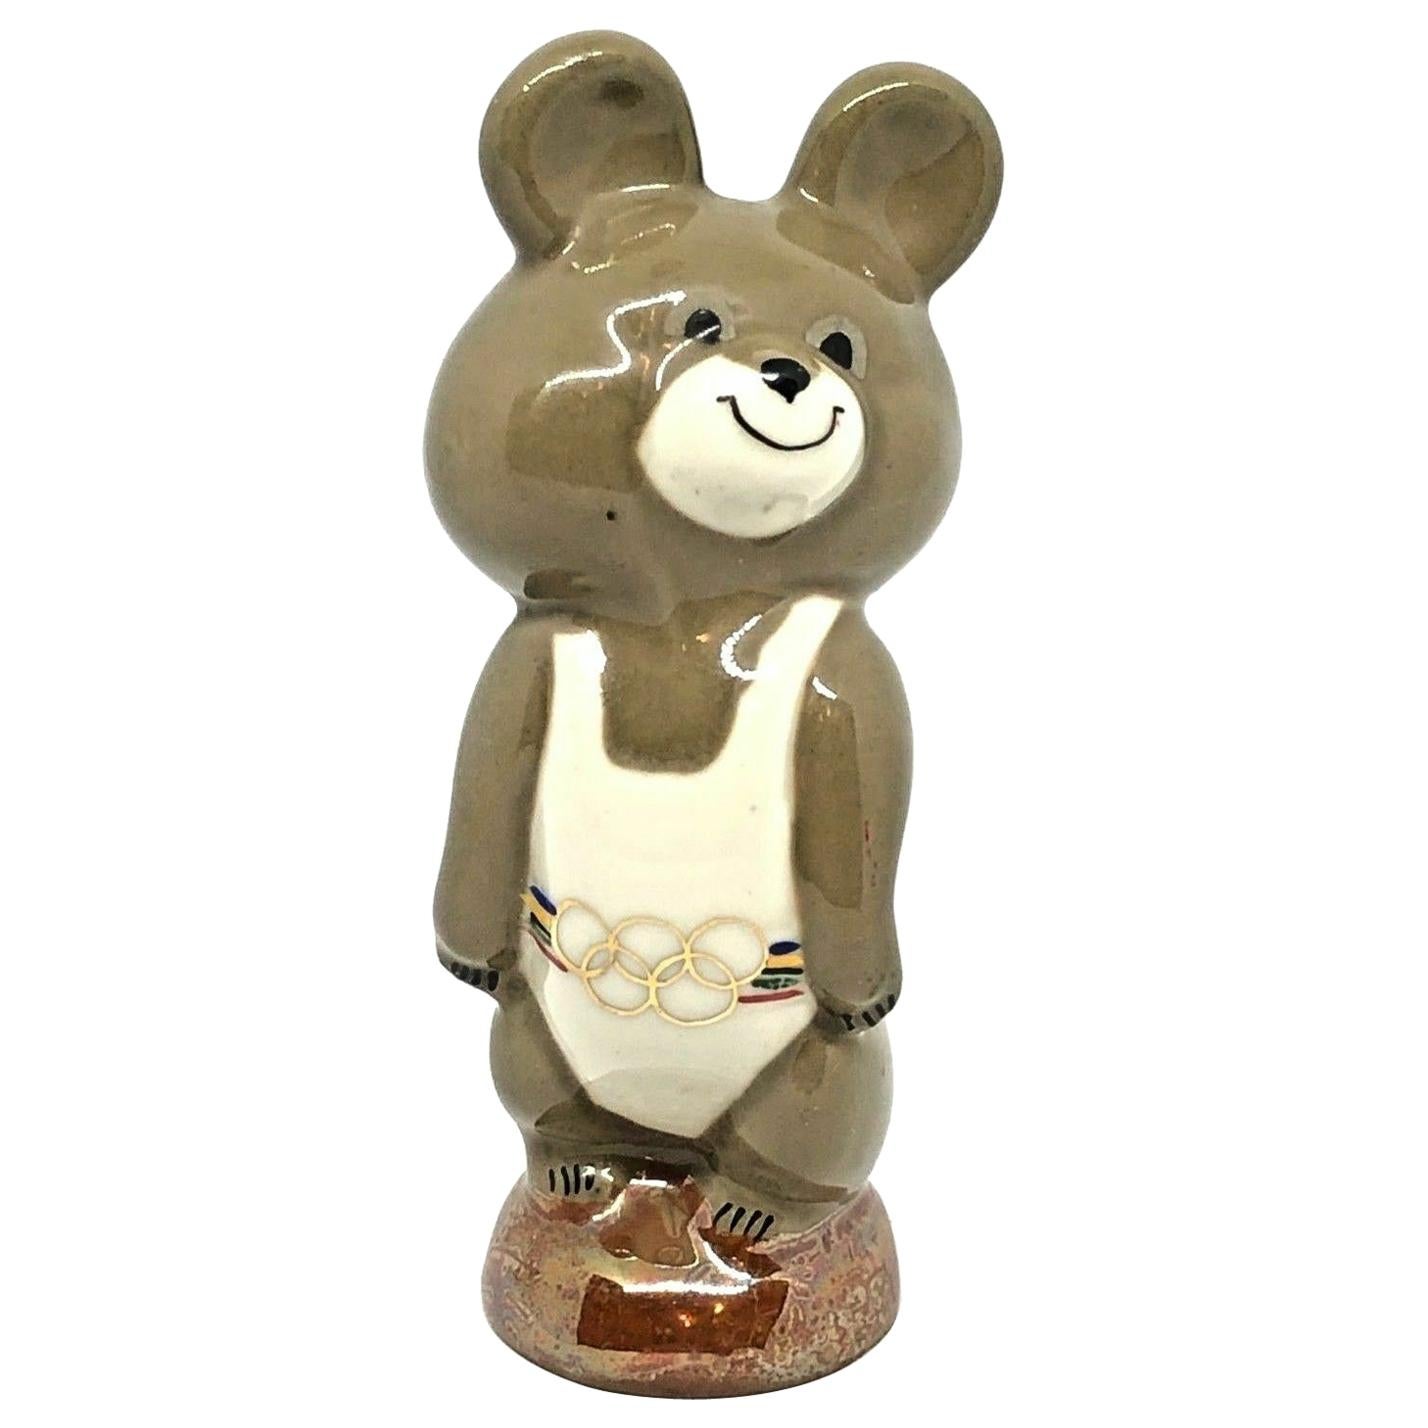 XXII Moscow Olympic Games 1980 Porcelain Mascot Misha Mishka Bear Vintage